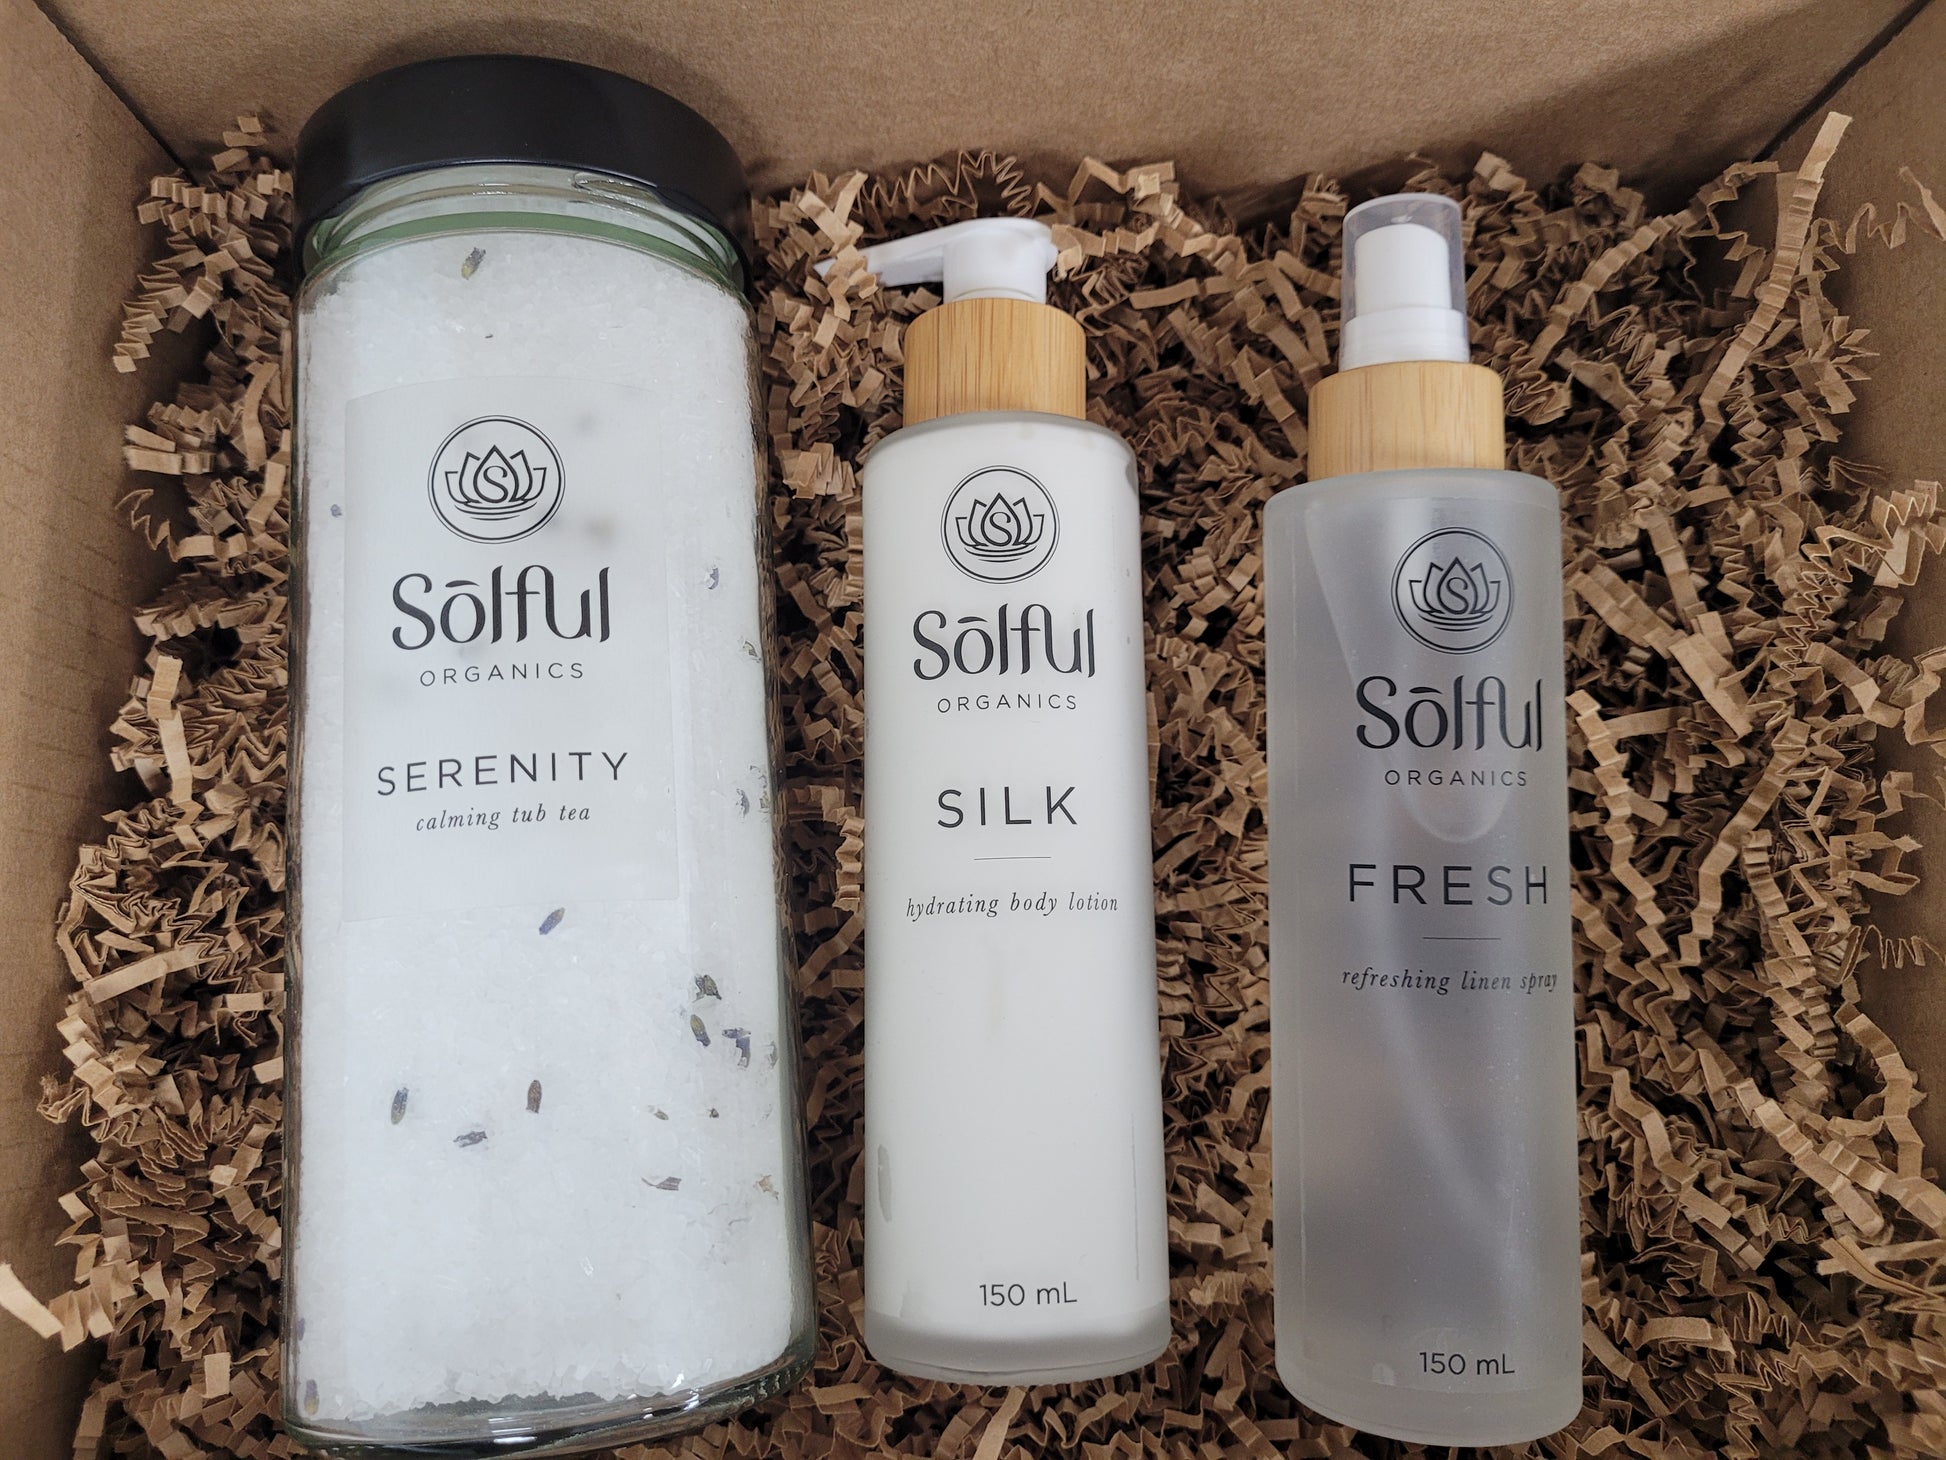 Solful Organics Box Set - The Bedtime Box - includes serenity tub tea, fresh and silk